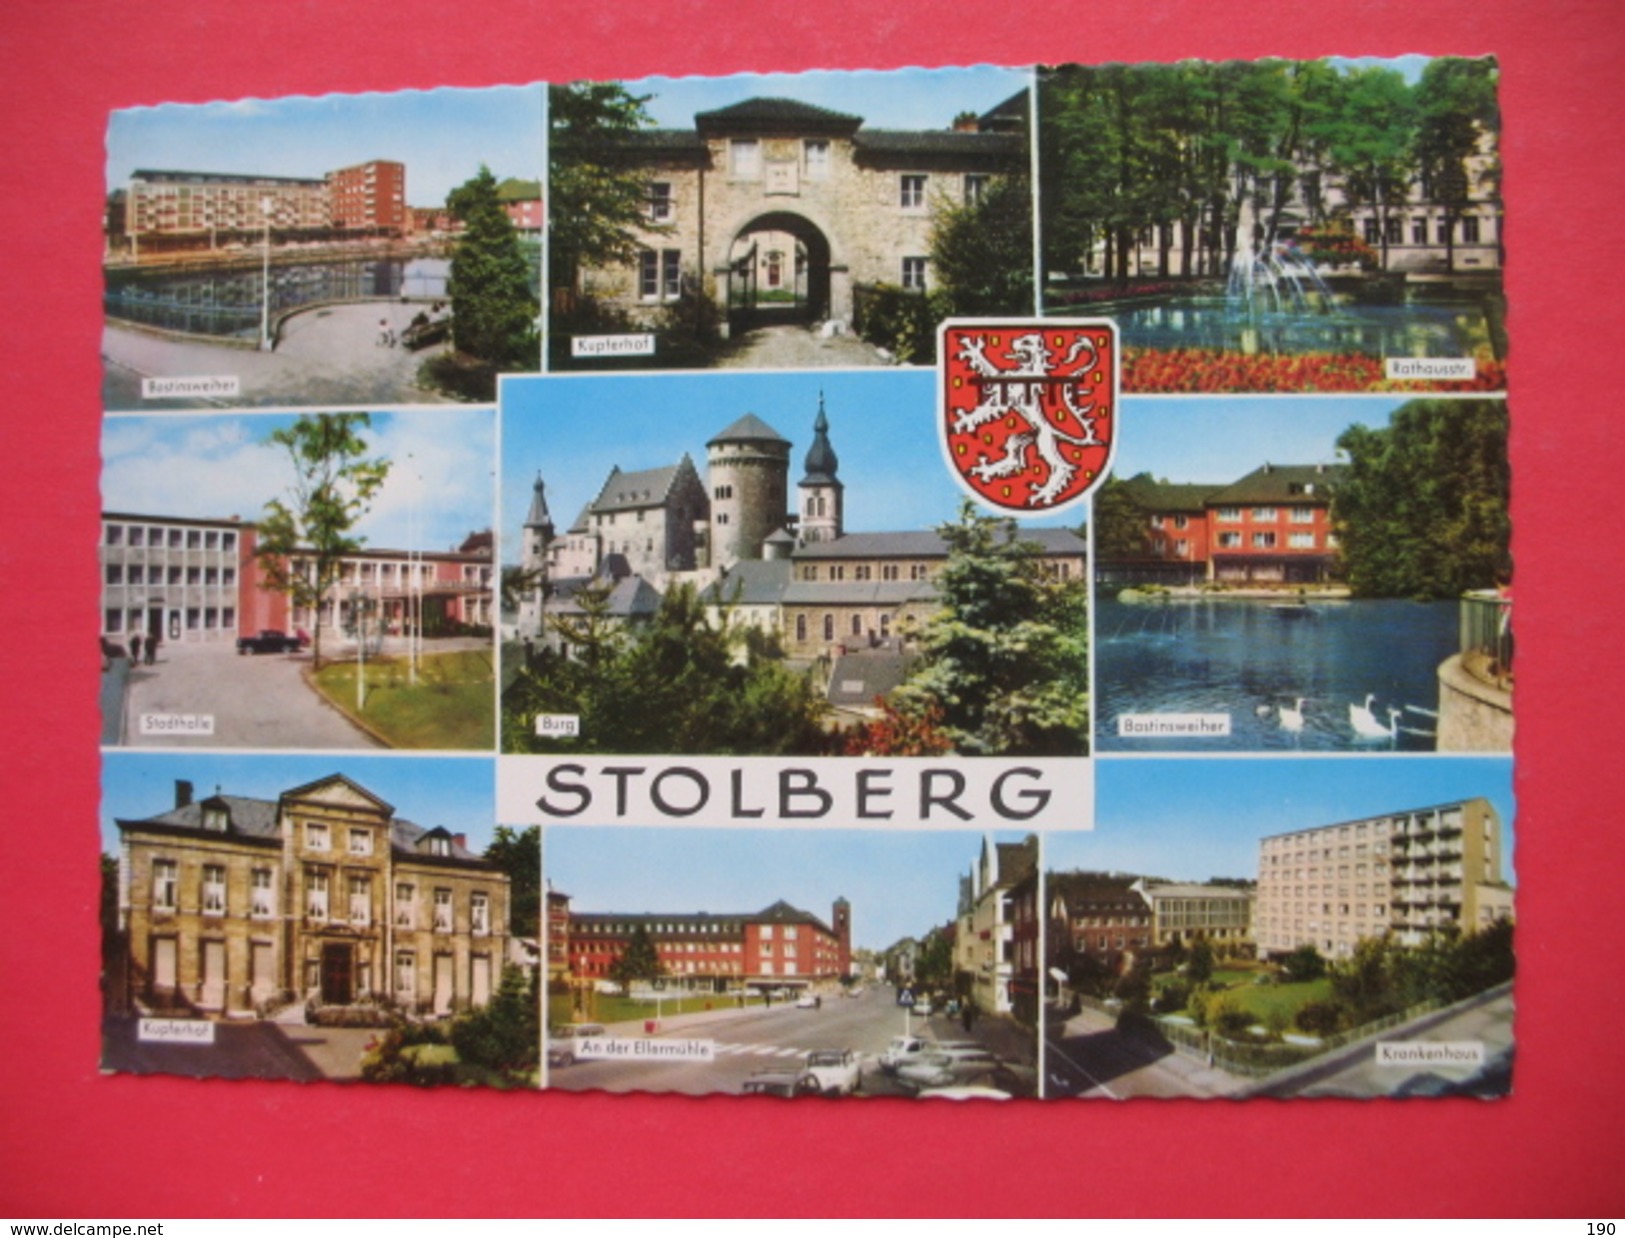 STOLBERG - Stolberg